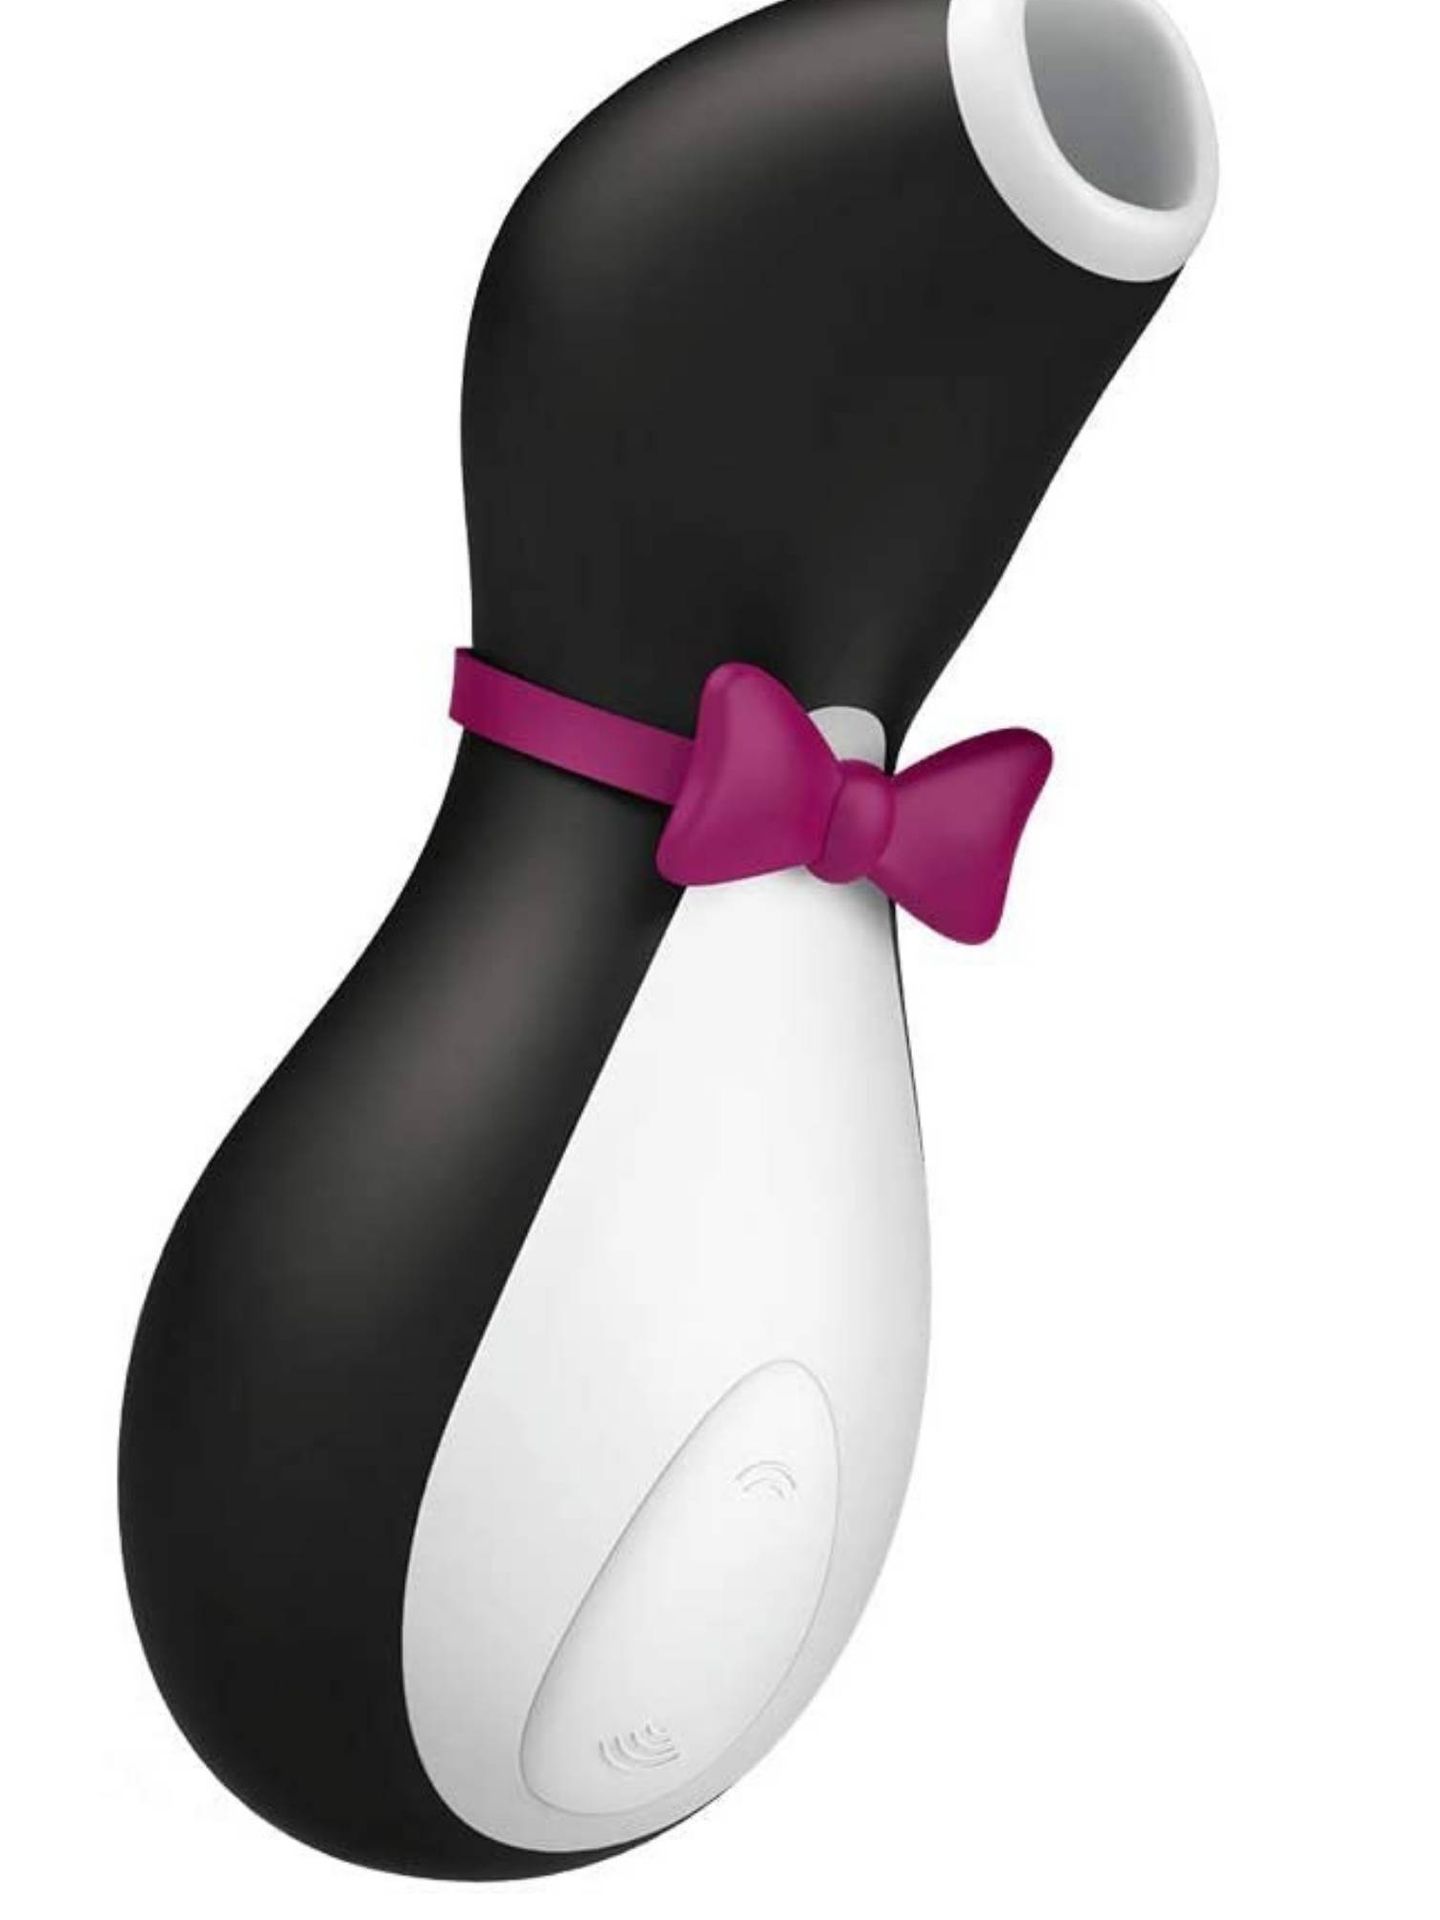 Satisfyer Penguin Next Generation (Amazon)